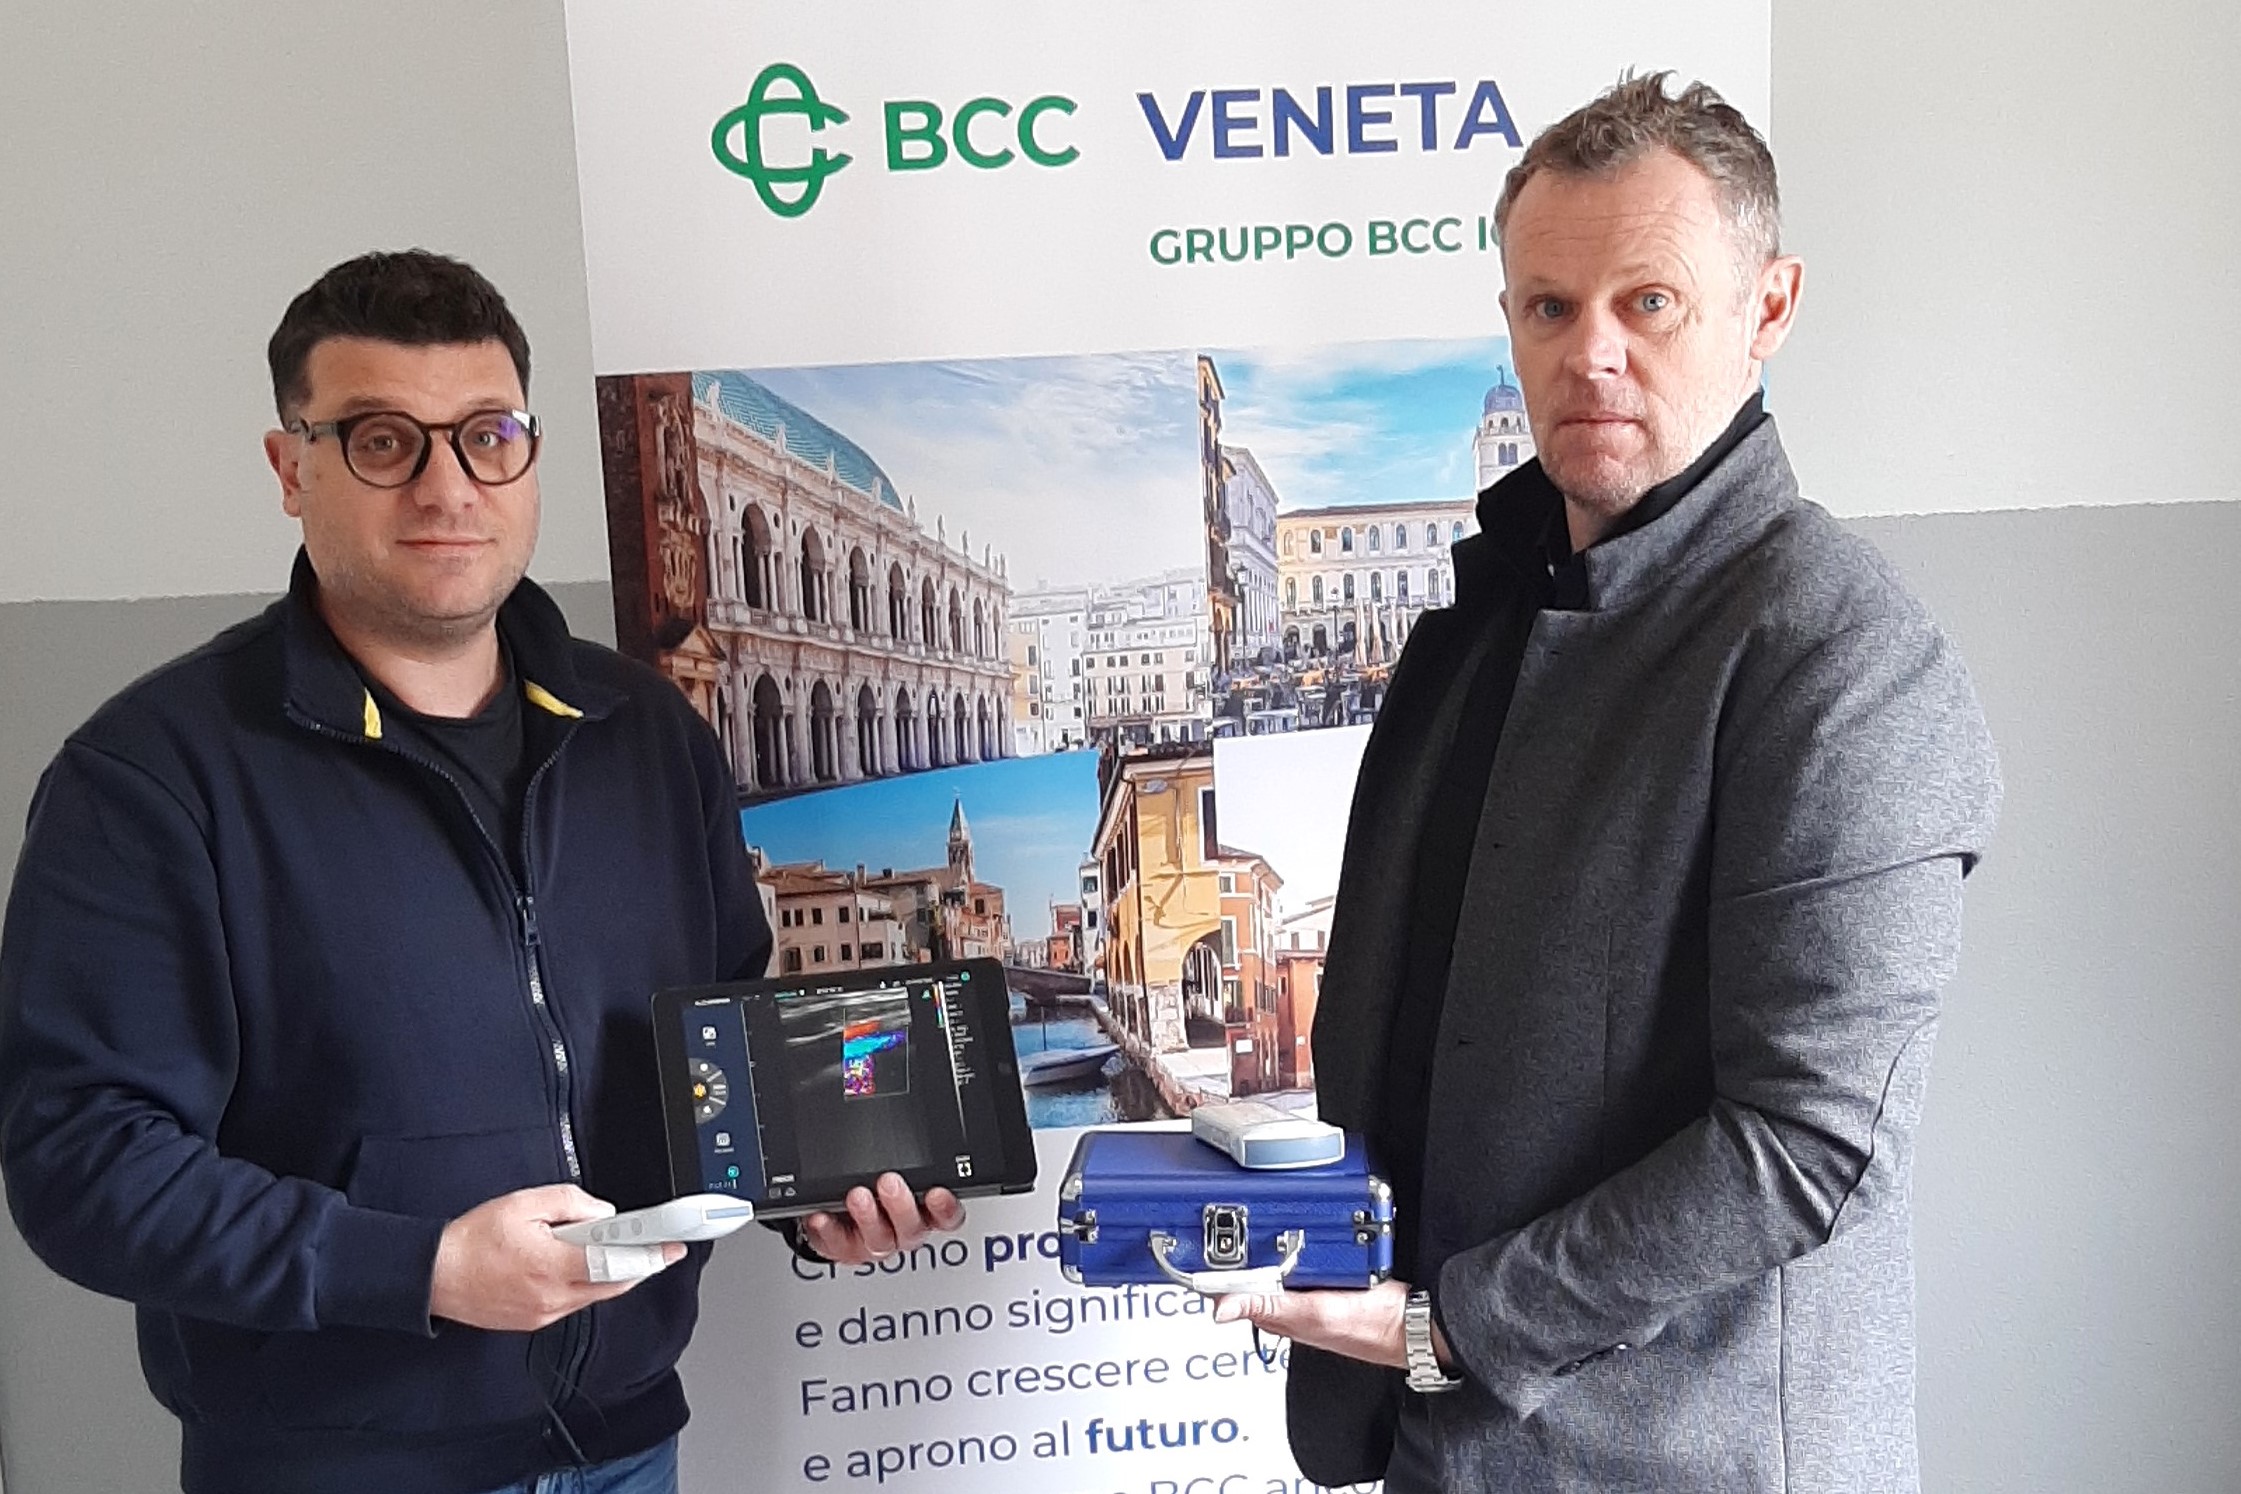 BCC Veneta consegna due ecografi